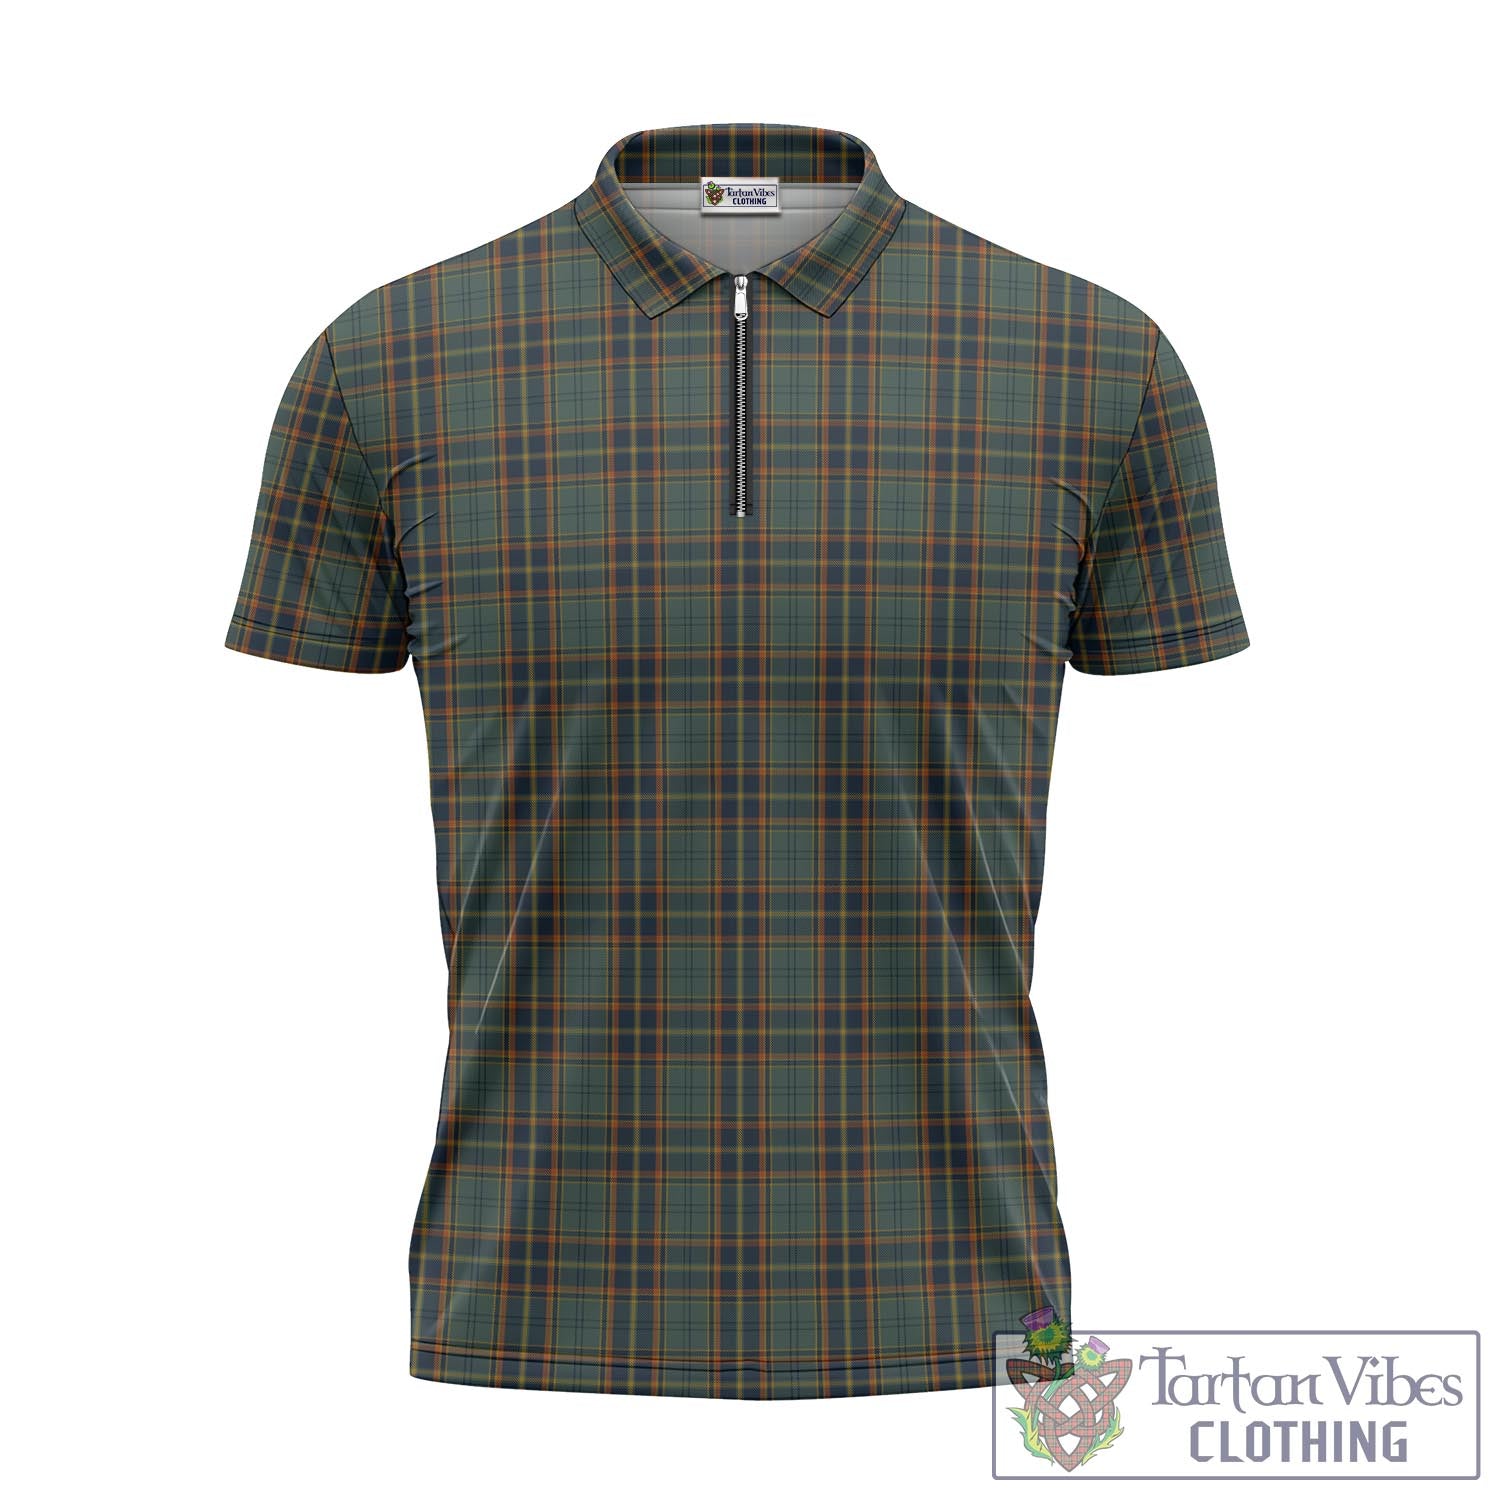 Tartan Vibes Clothing Antrim County Ireland Tartan Zipper Polo Shirt